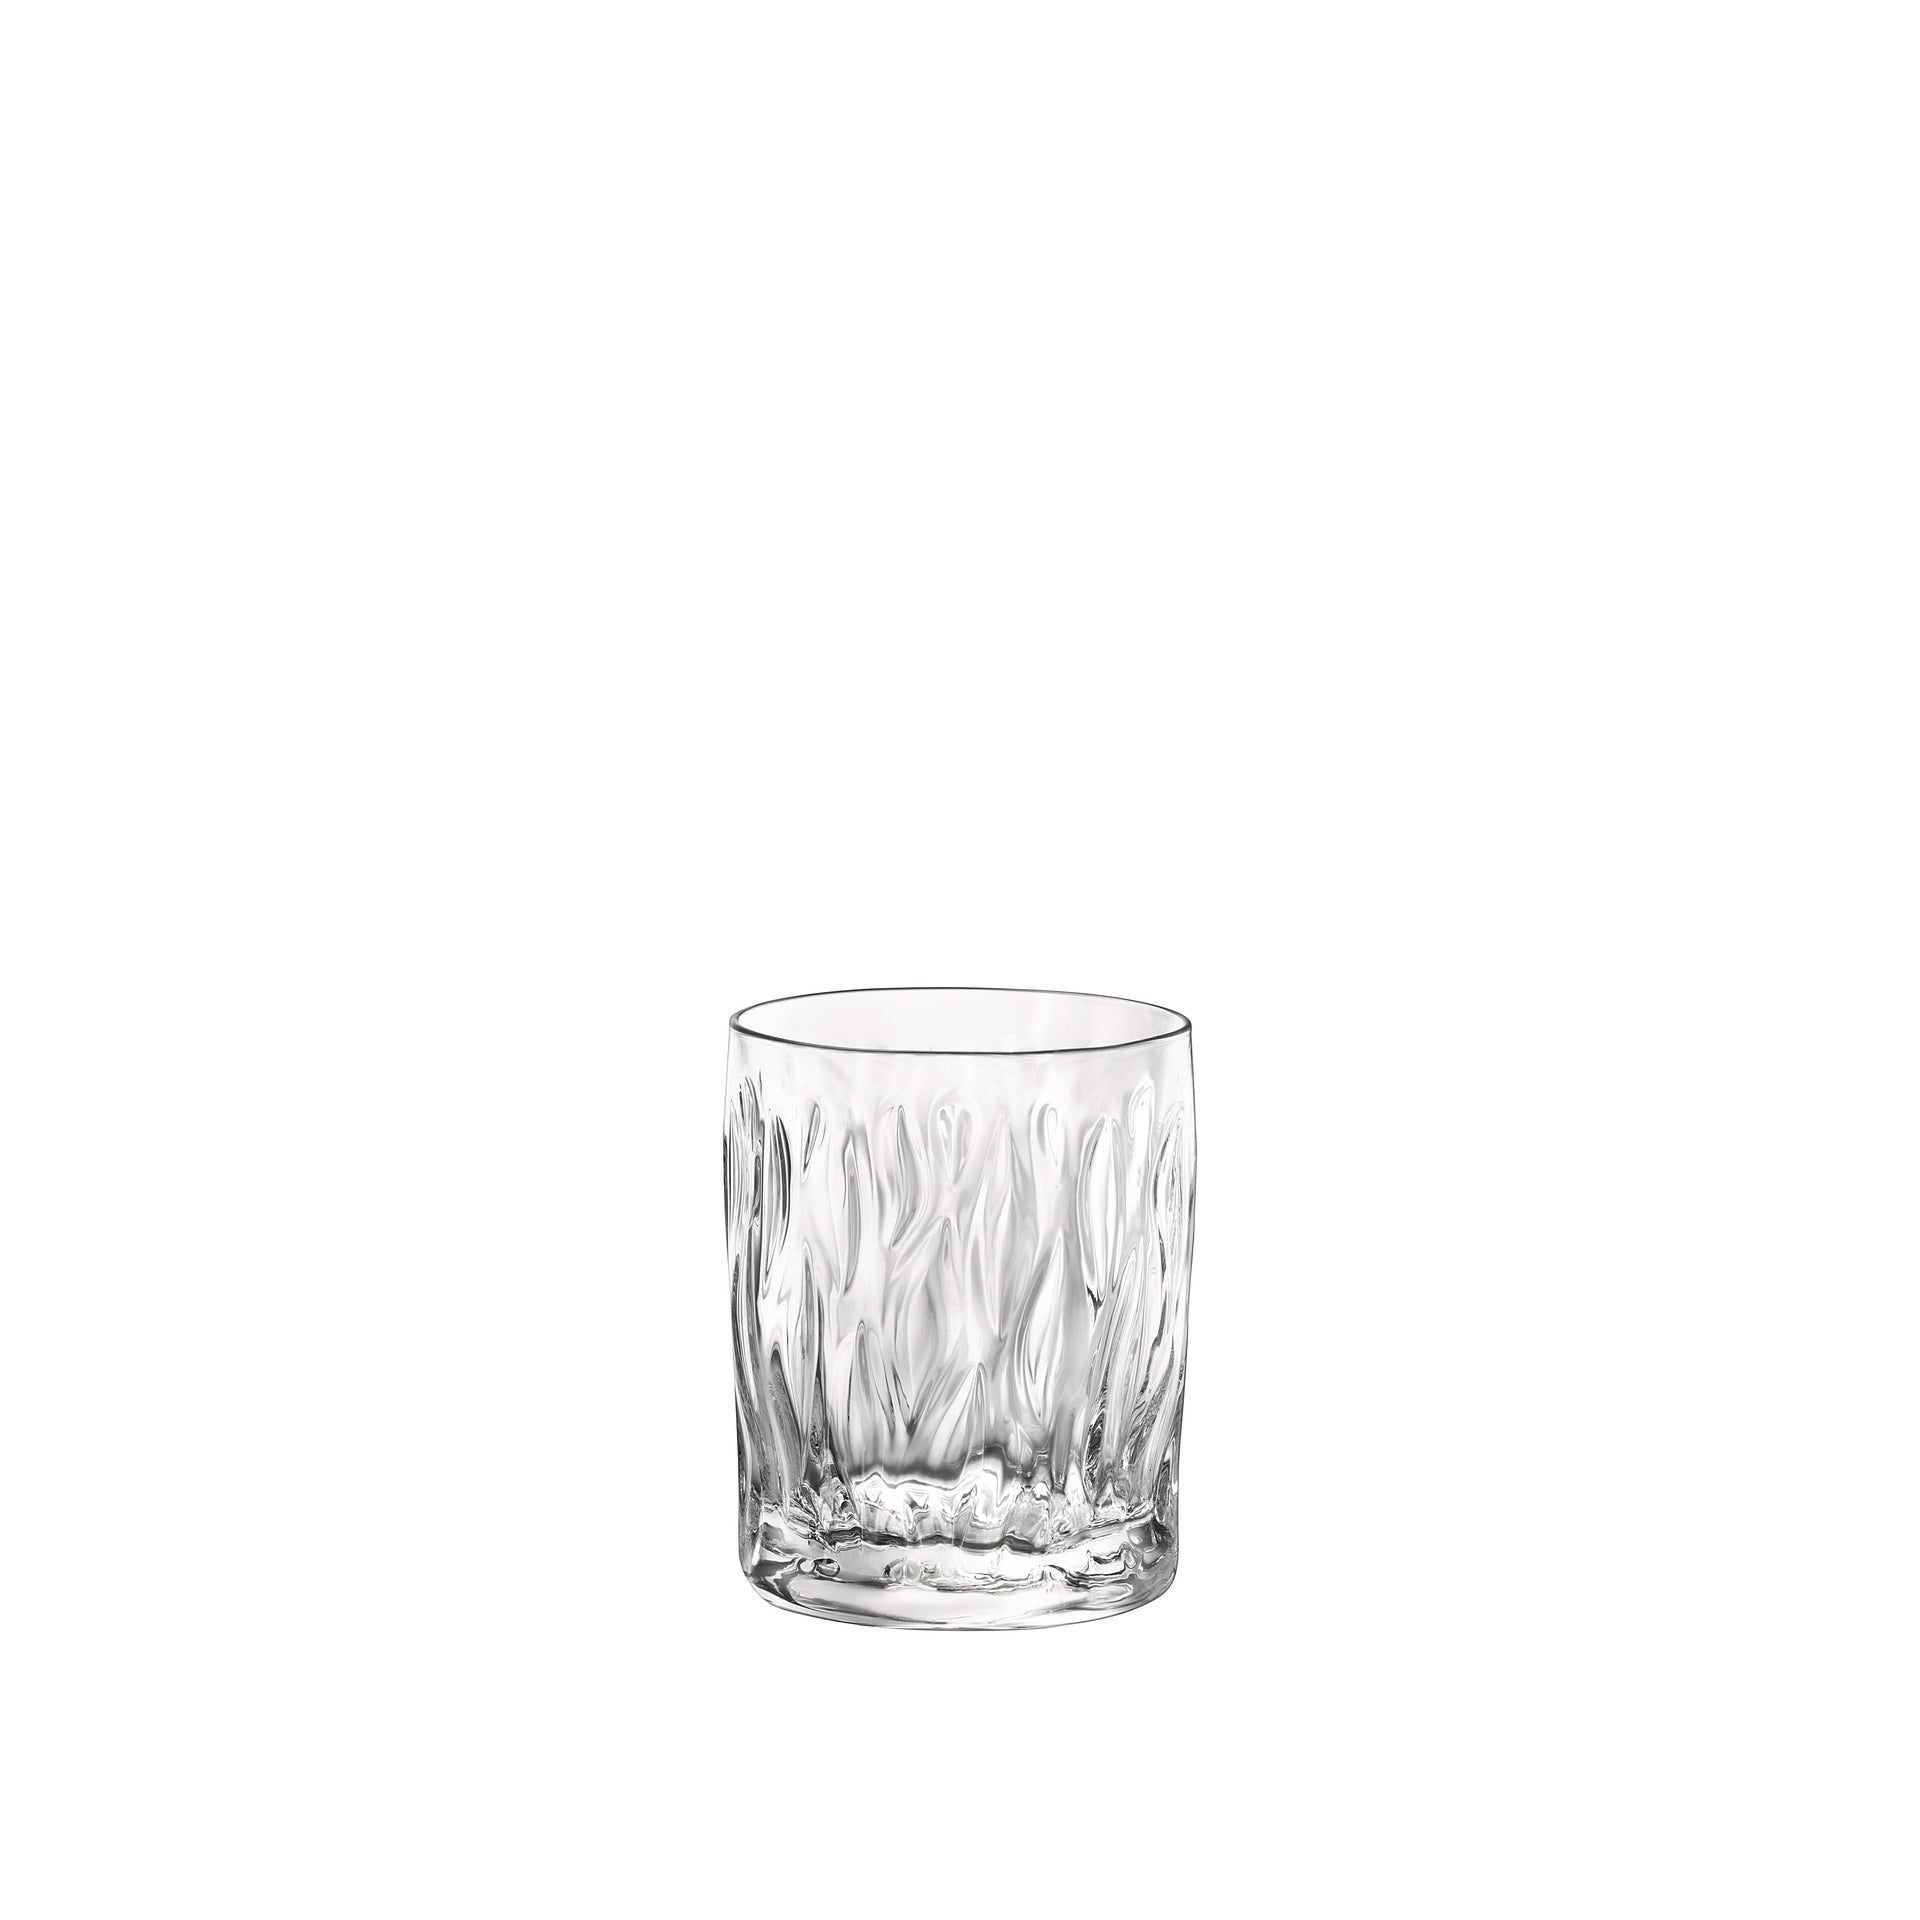 Wind 11 .75 oz. DOF Drinking Glasses (Set of 6)